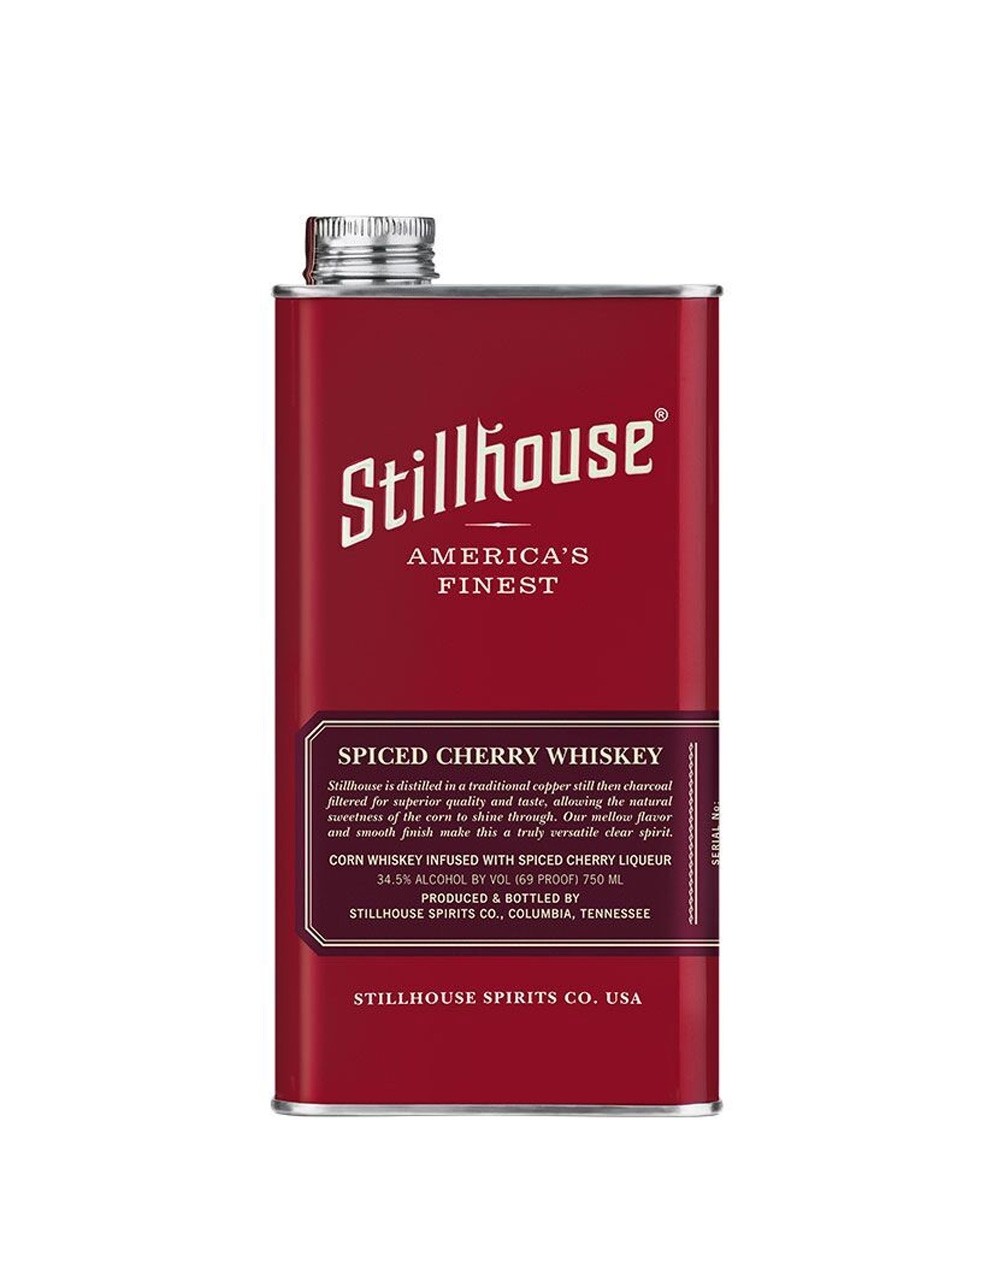 Stillhouse Spiced Cherry Whiskey | Buy Online or Send as a